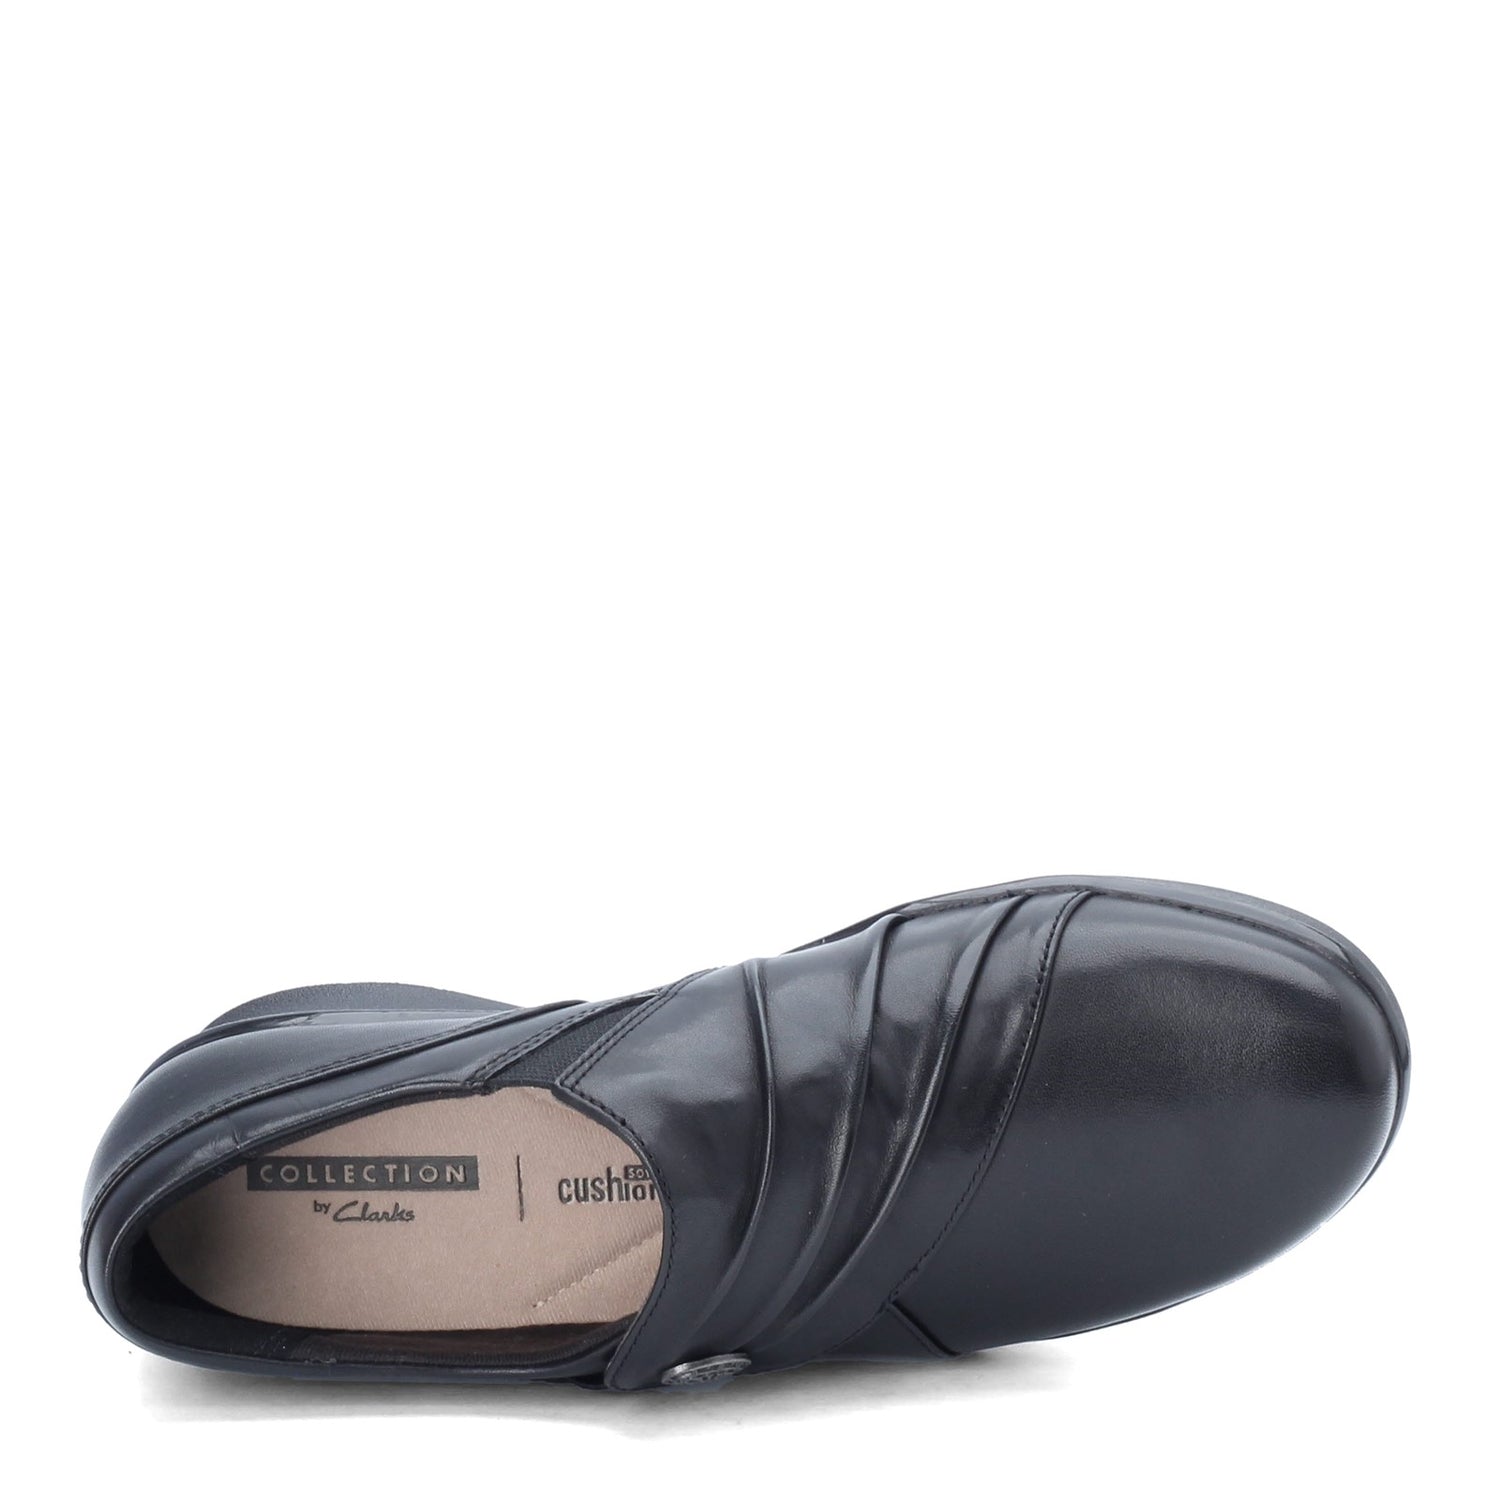 Peltz Shoes  Women's Clarks Hope Roxanne Slip-On Black Leather 26137200